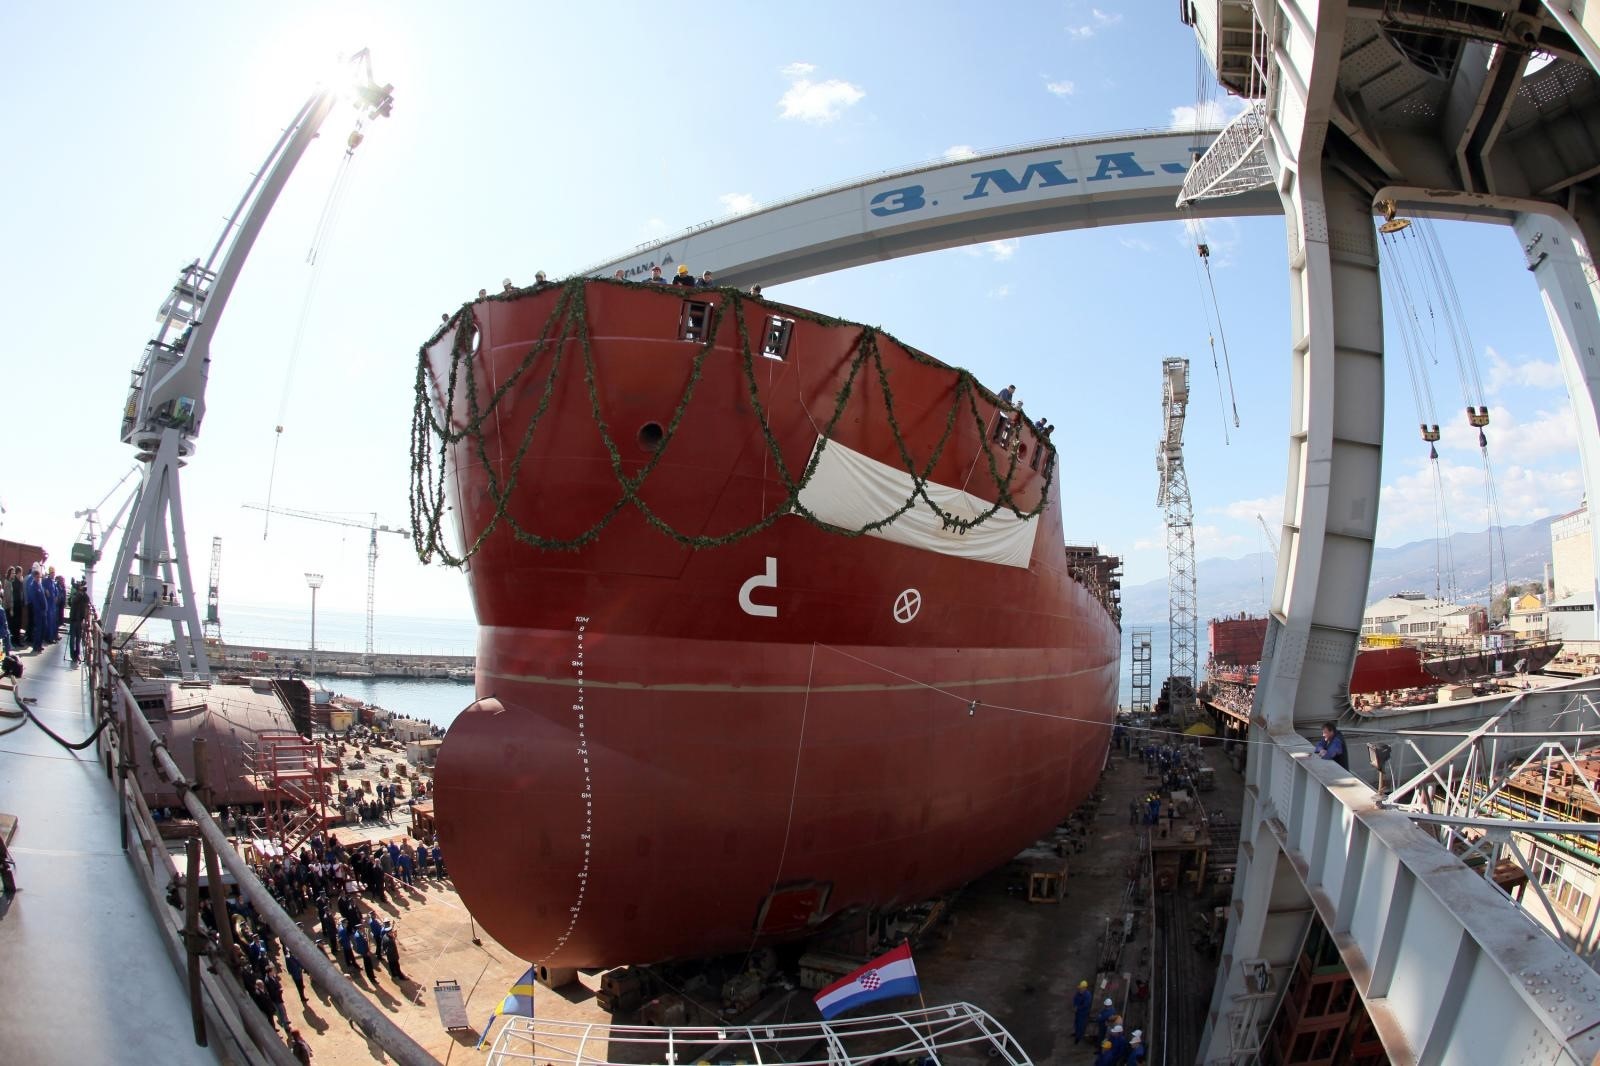 13.03.2012., Rijeka - U brodogradilistu 3Maj porinut je tanker za svedsku kompaniju Wisby Tankers.
Photo: Nel Pavletic/PIXSELL